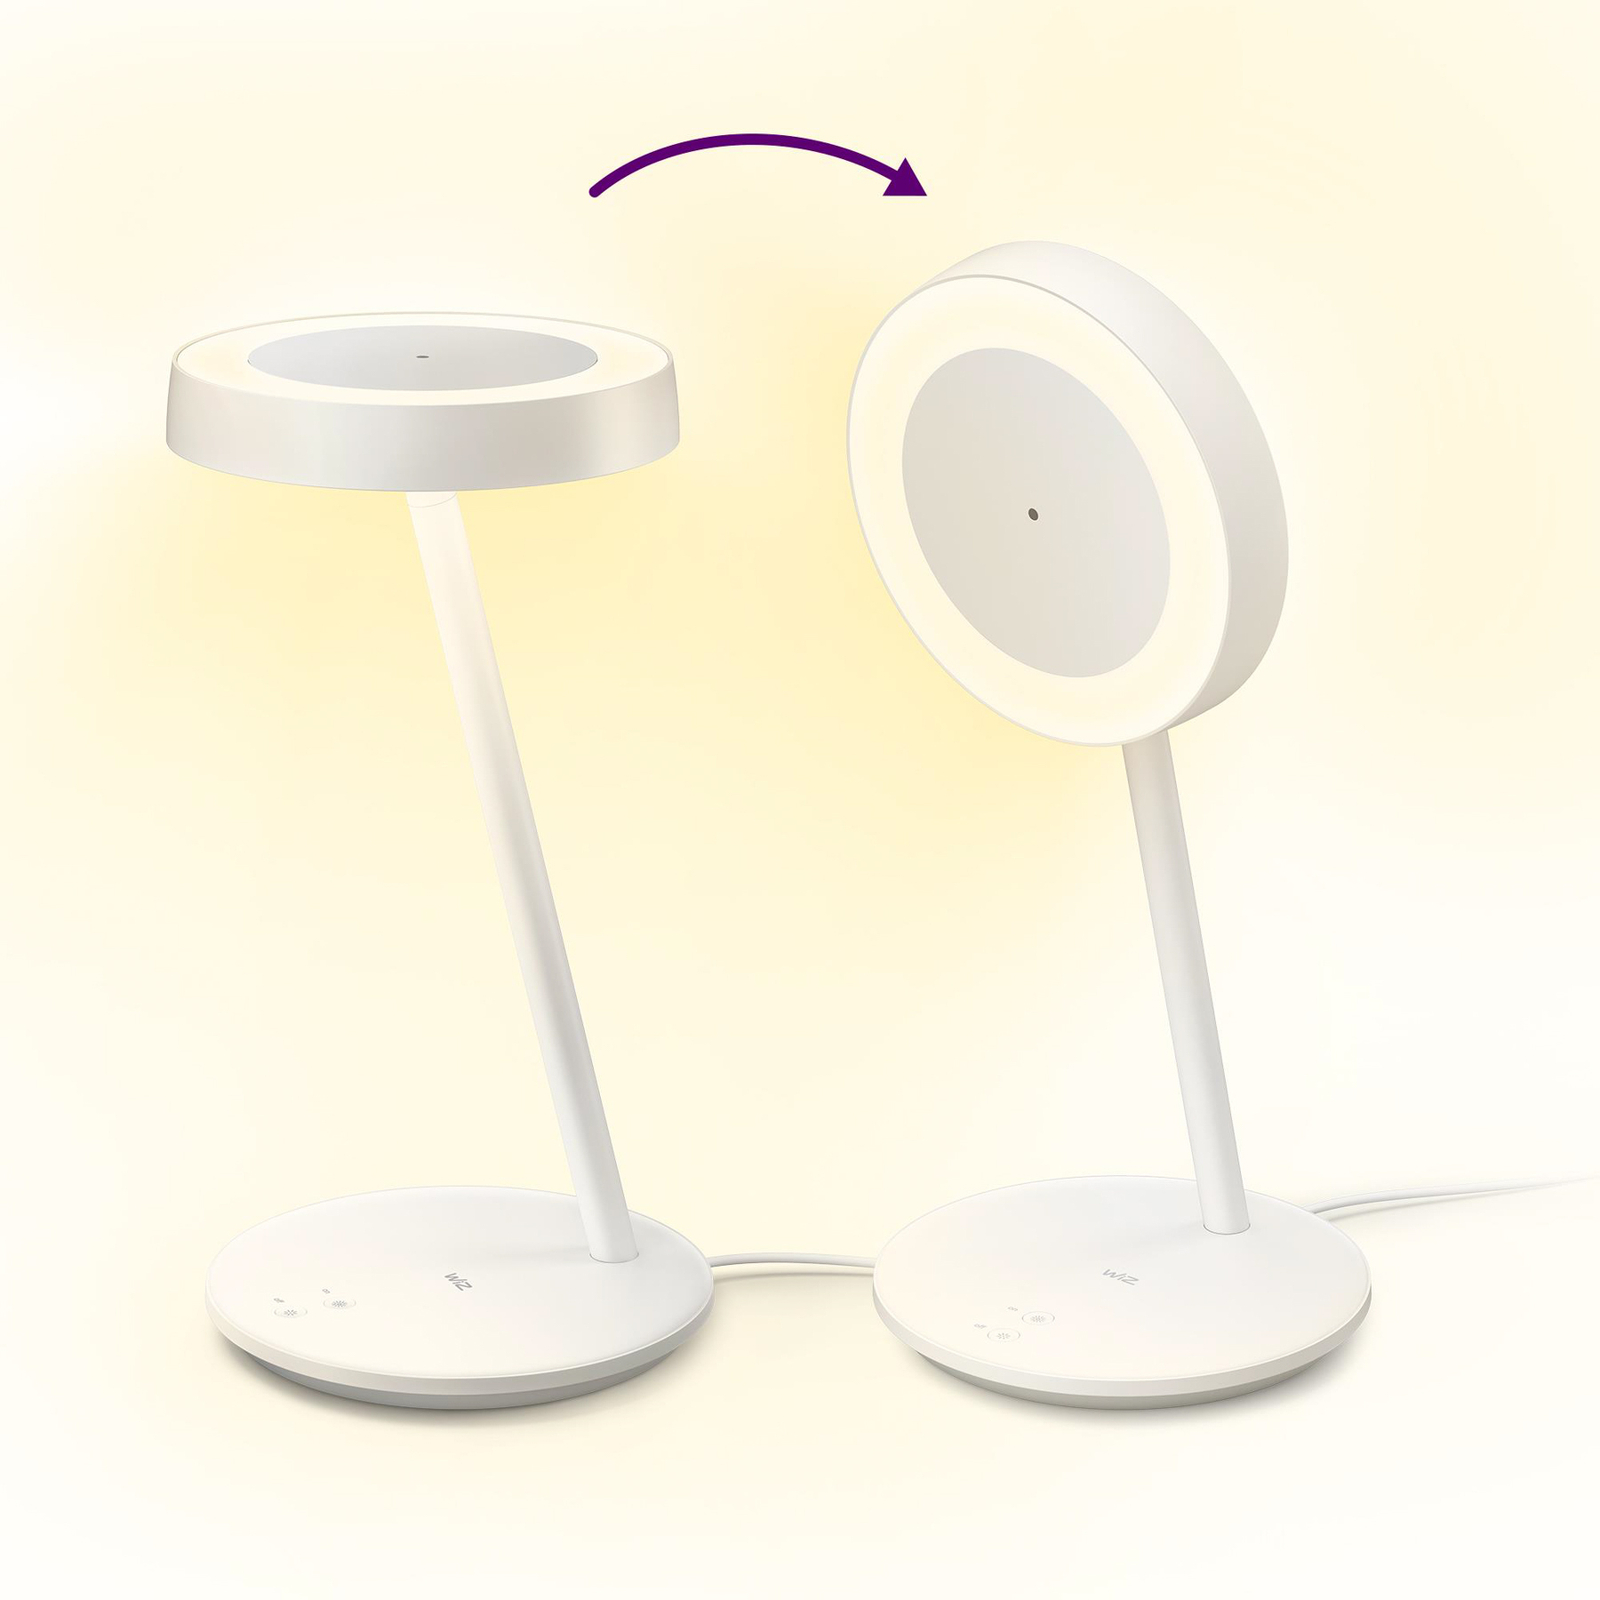 WiZ Portrait LED table lamp ring light sensor CCT